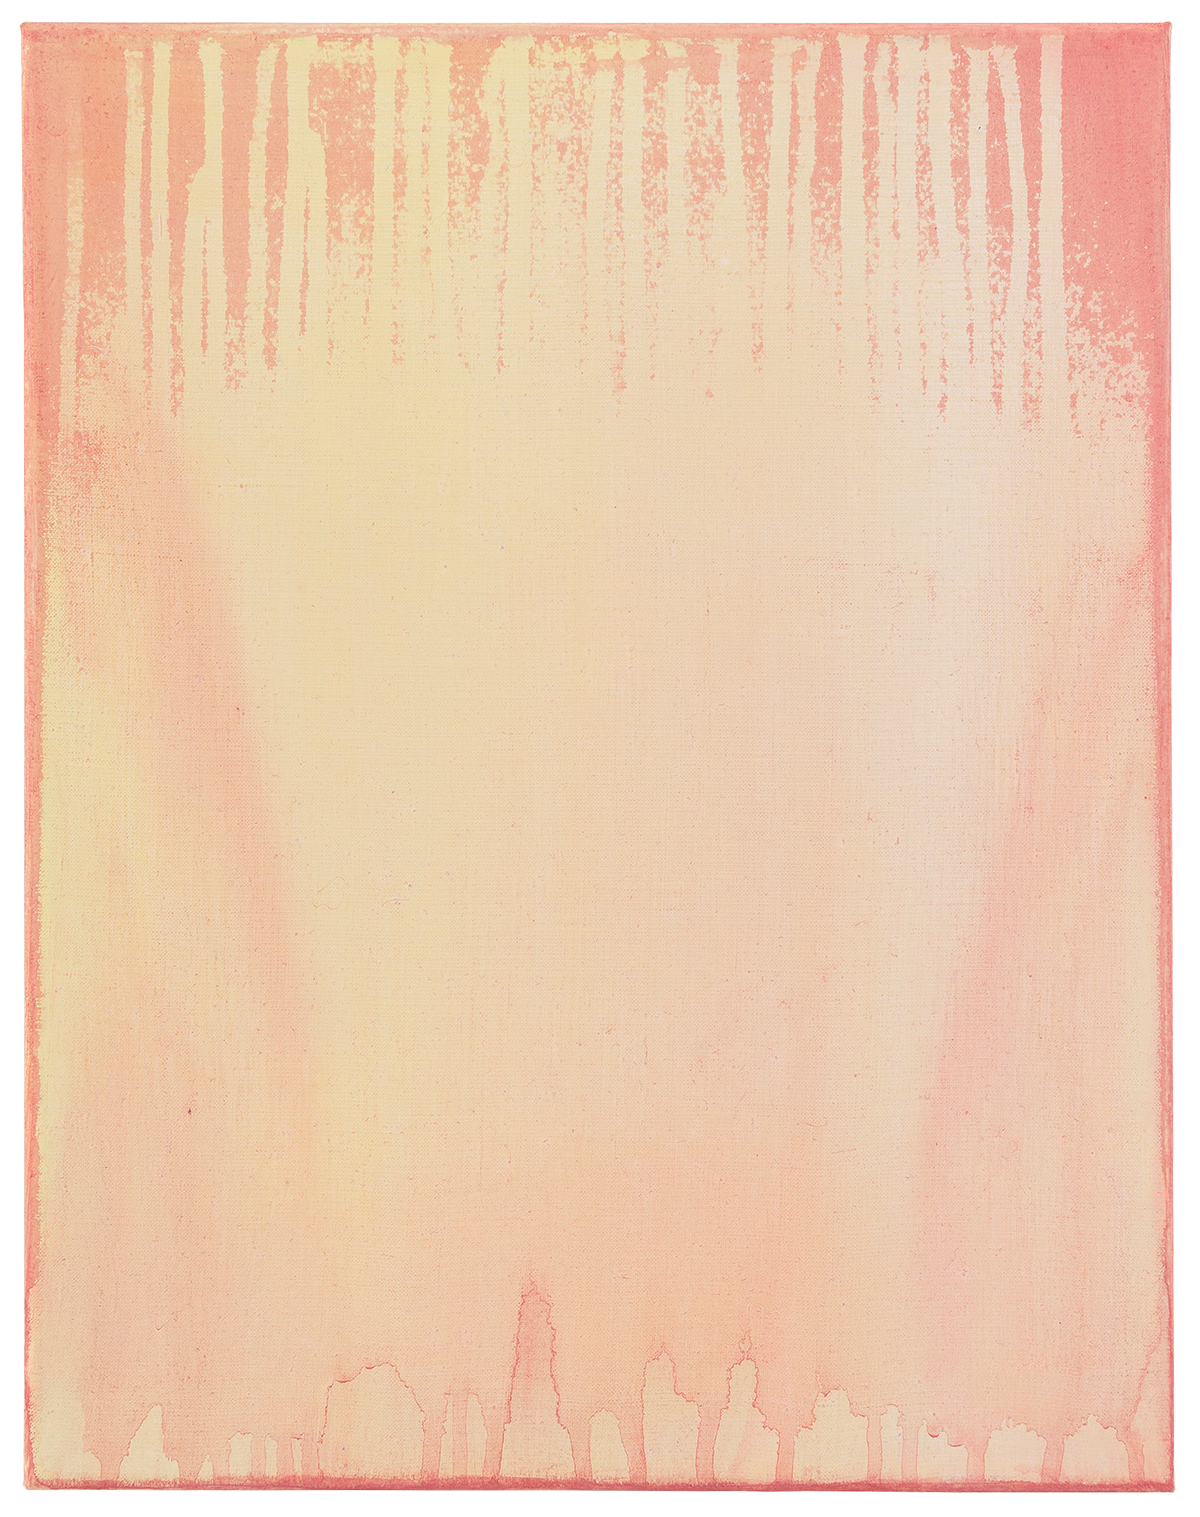 Daniel Schubert, untitled (pleinair series), 2018, Acrylic on canvas, 45 x 35 cm